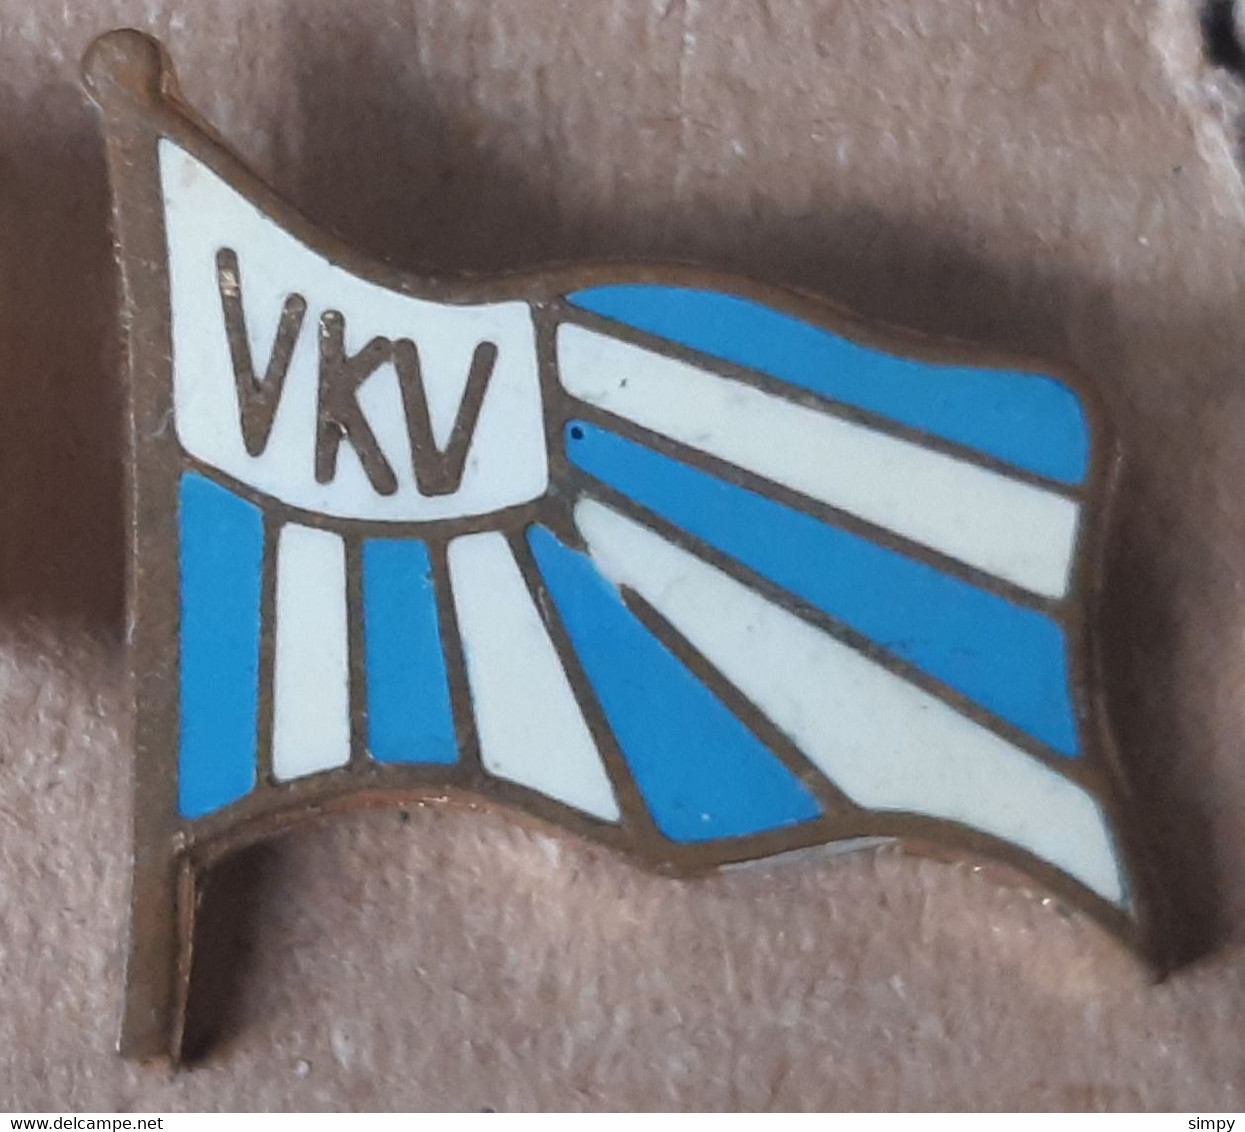 Rowing  Club VKV Vukovar Croatia Vintage Enamel Badge Pin - Rowing